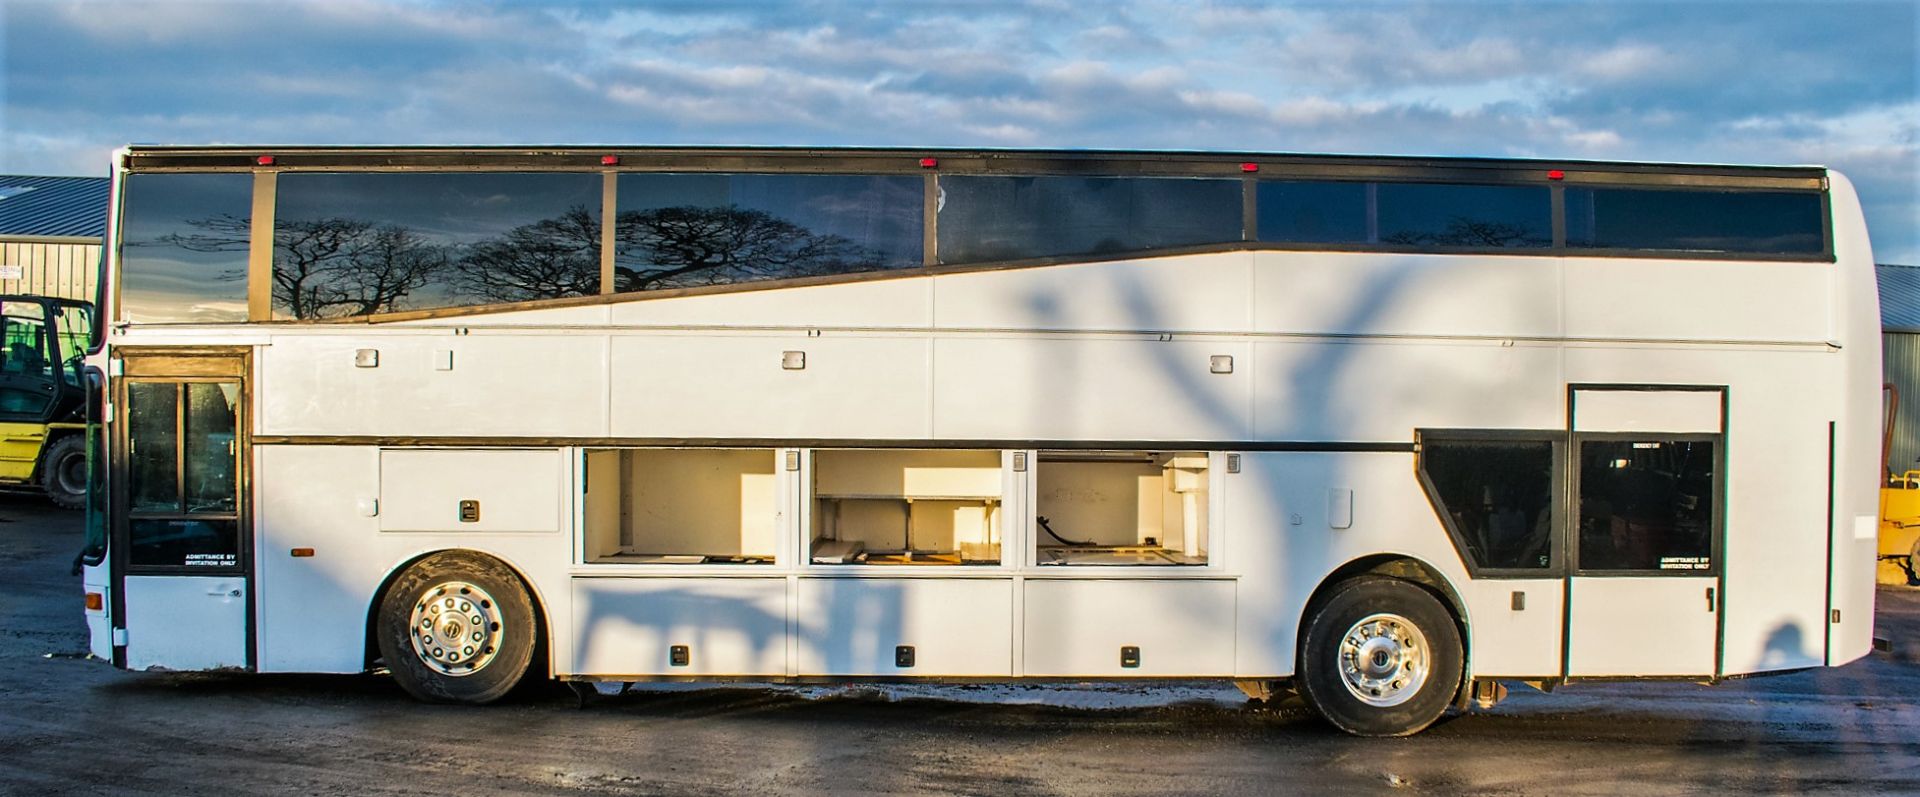 Vanhool double decker luxury tour coach Registration Number: DIB 2061 Date of Registration: 10/06/ - Image 7 of 24